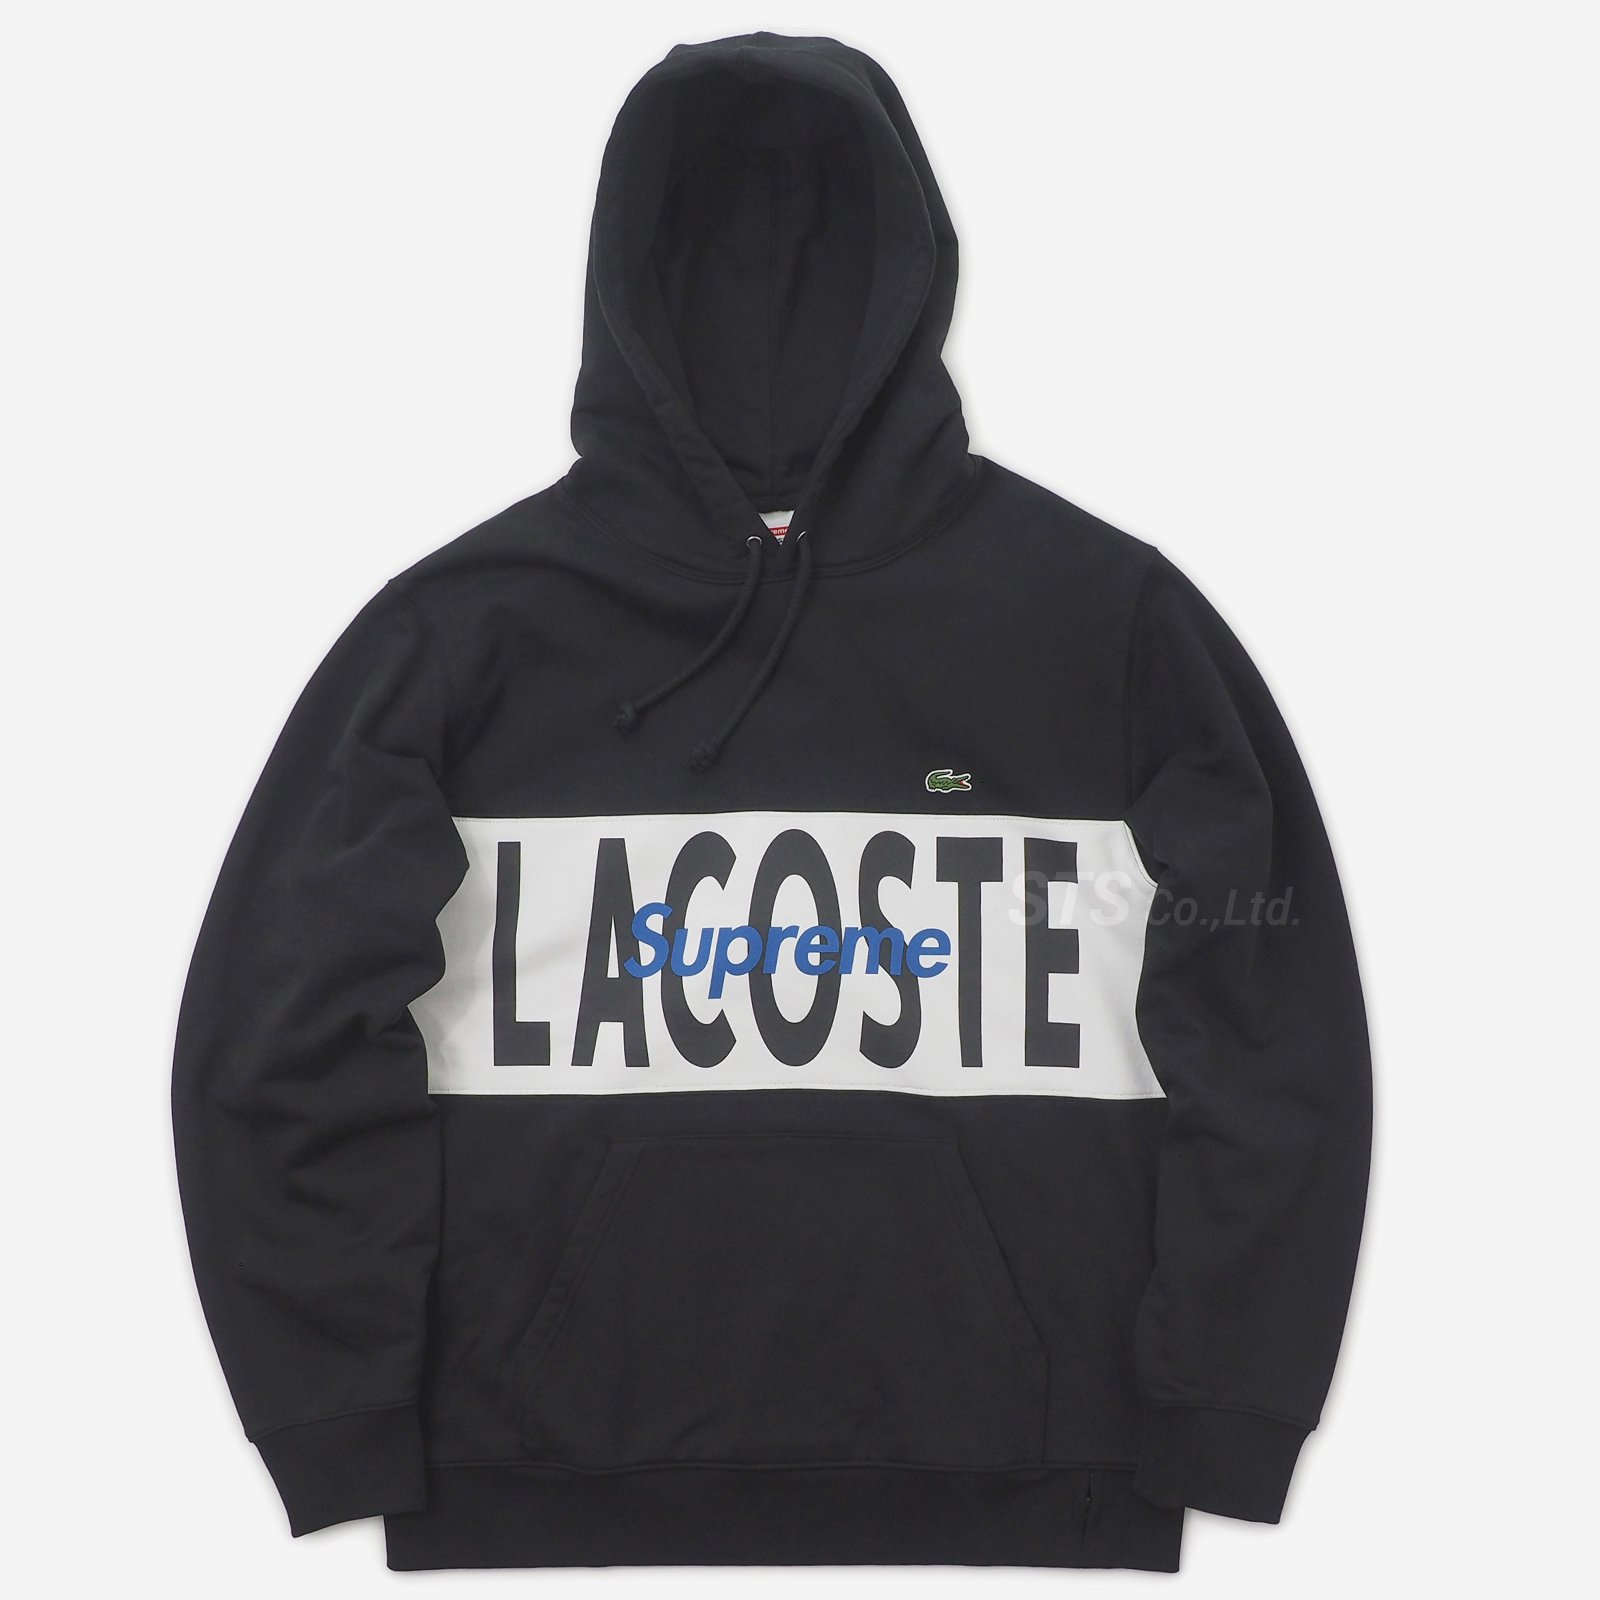 Supreme/LACOSTE Logo Panel Hooded Sweatshirt - ParkSIDER